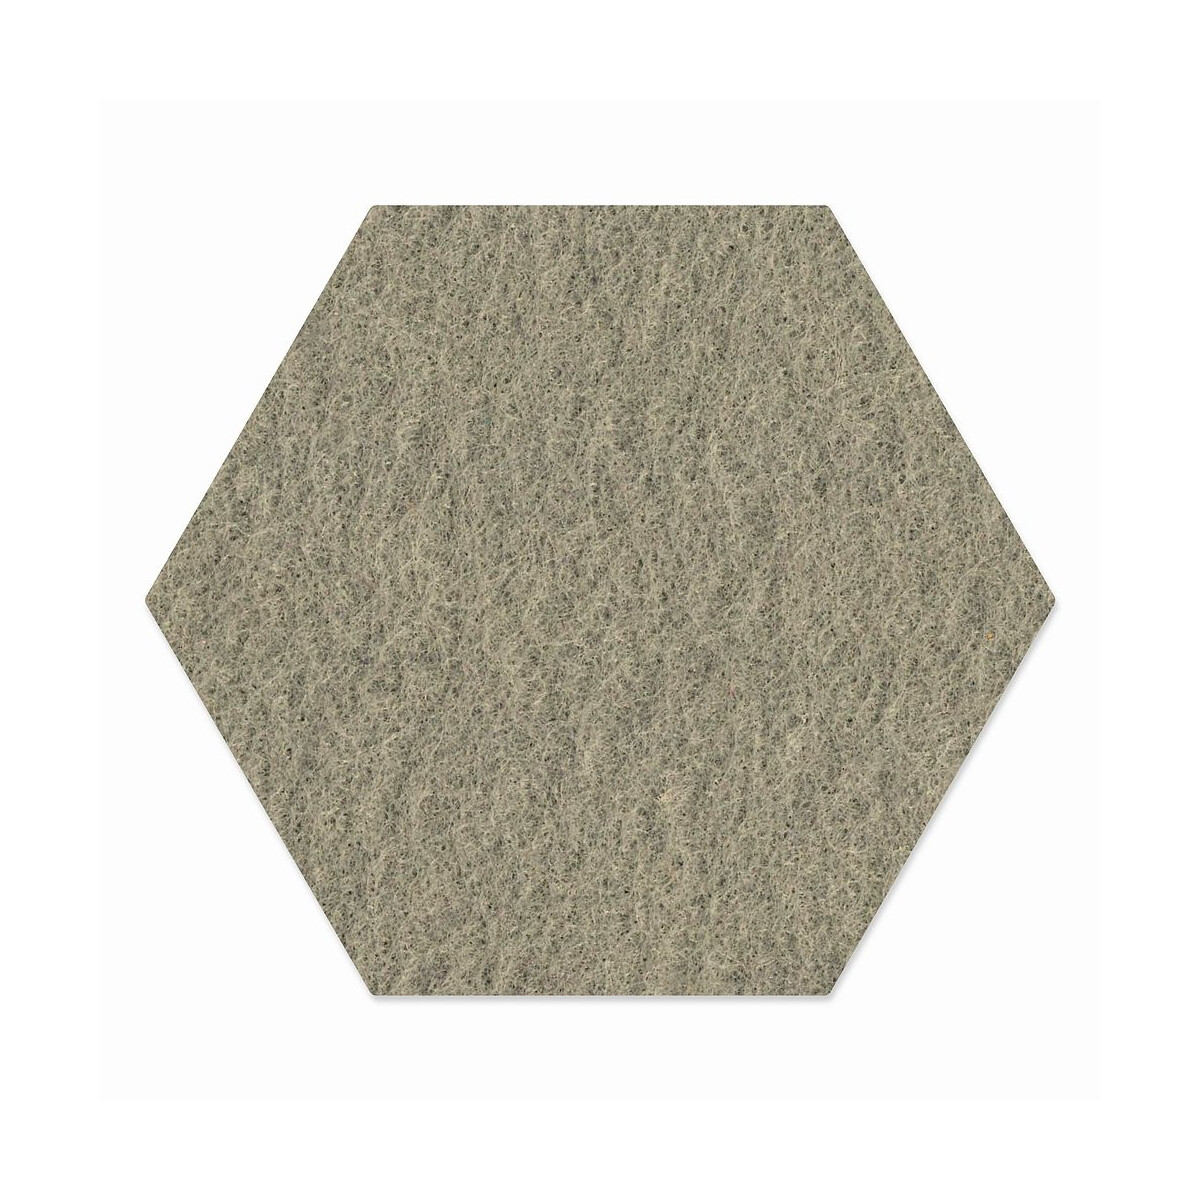 1 x FILZ Untersetzer Wabe, Hexagon 15 cm - grau